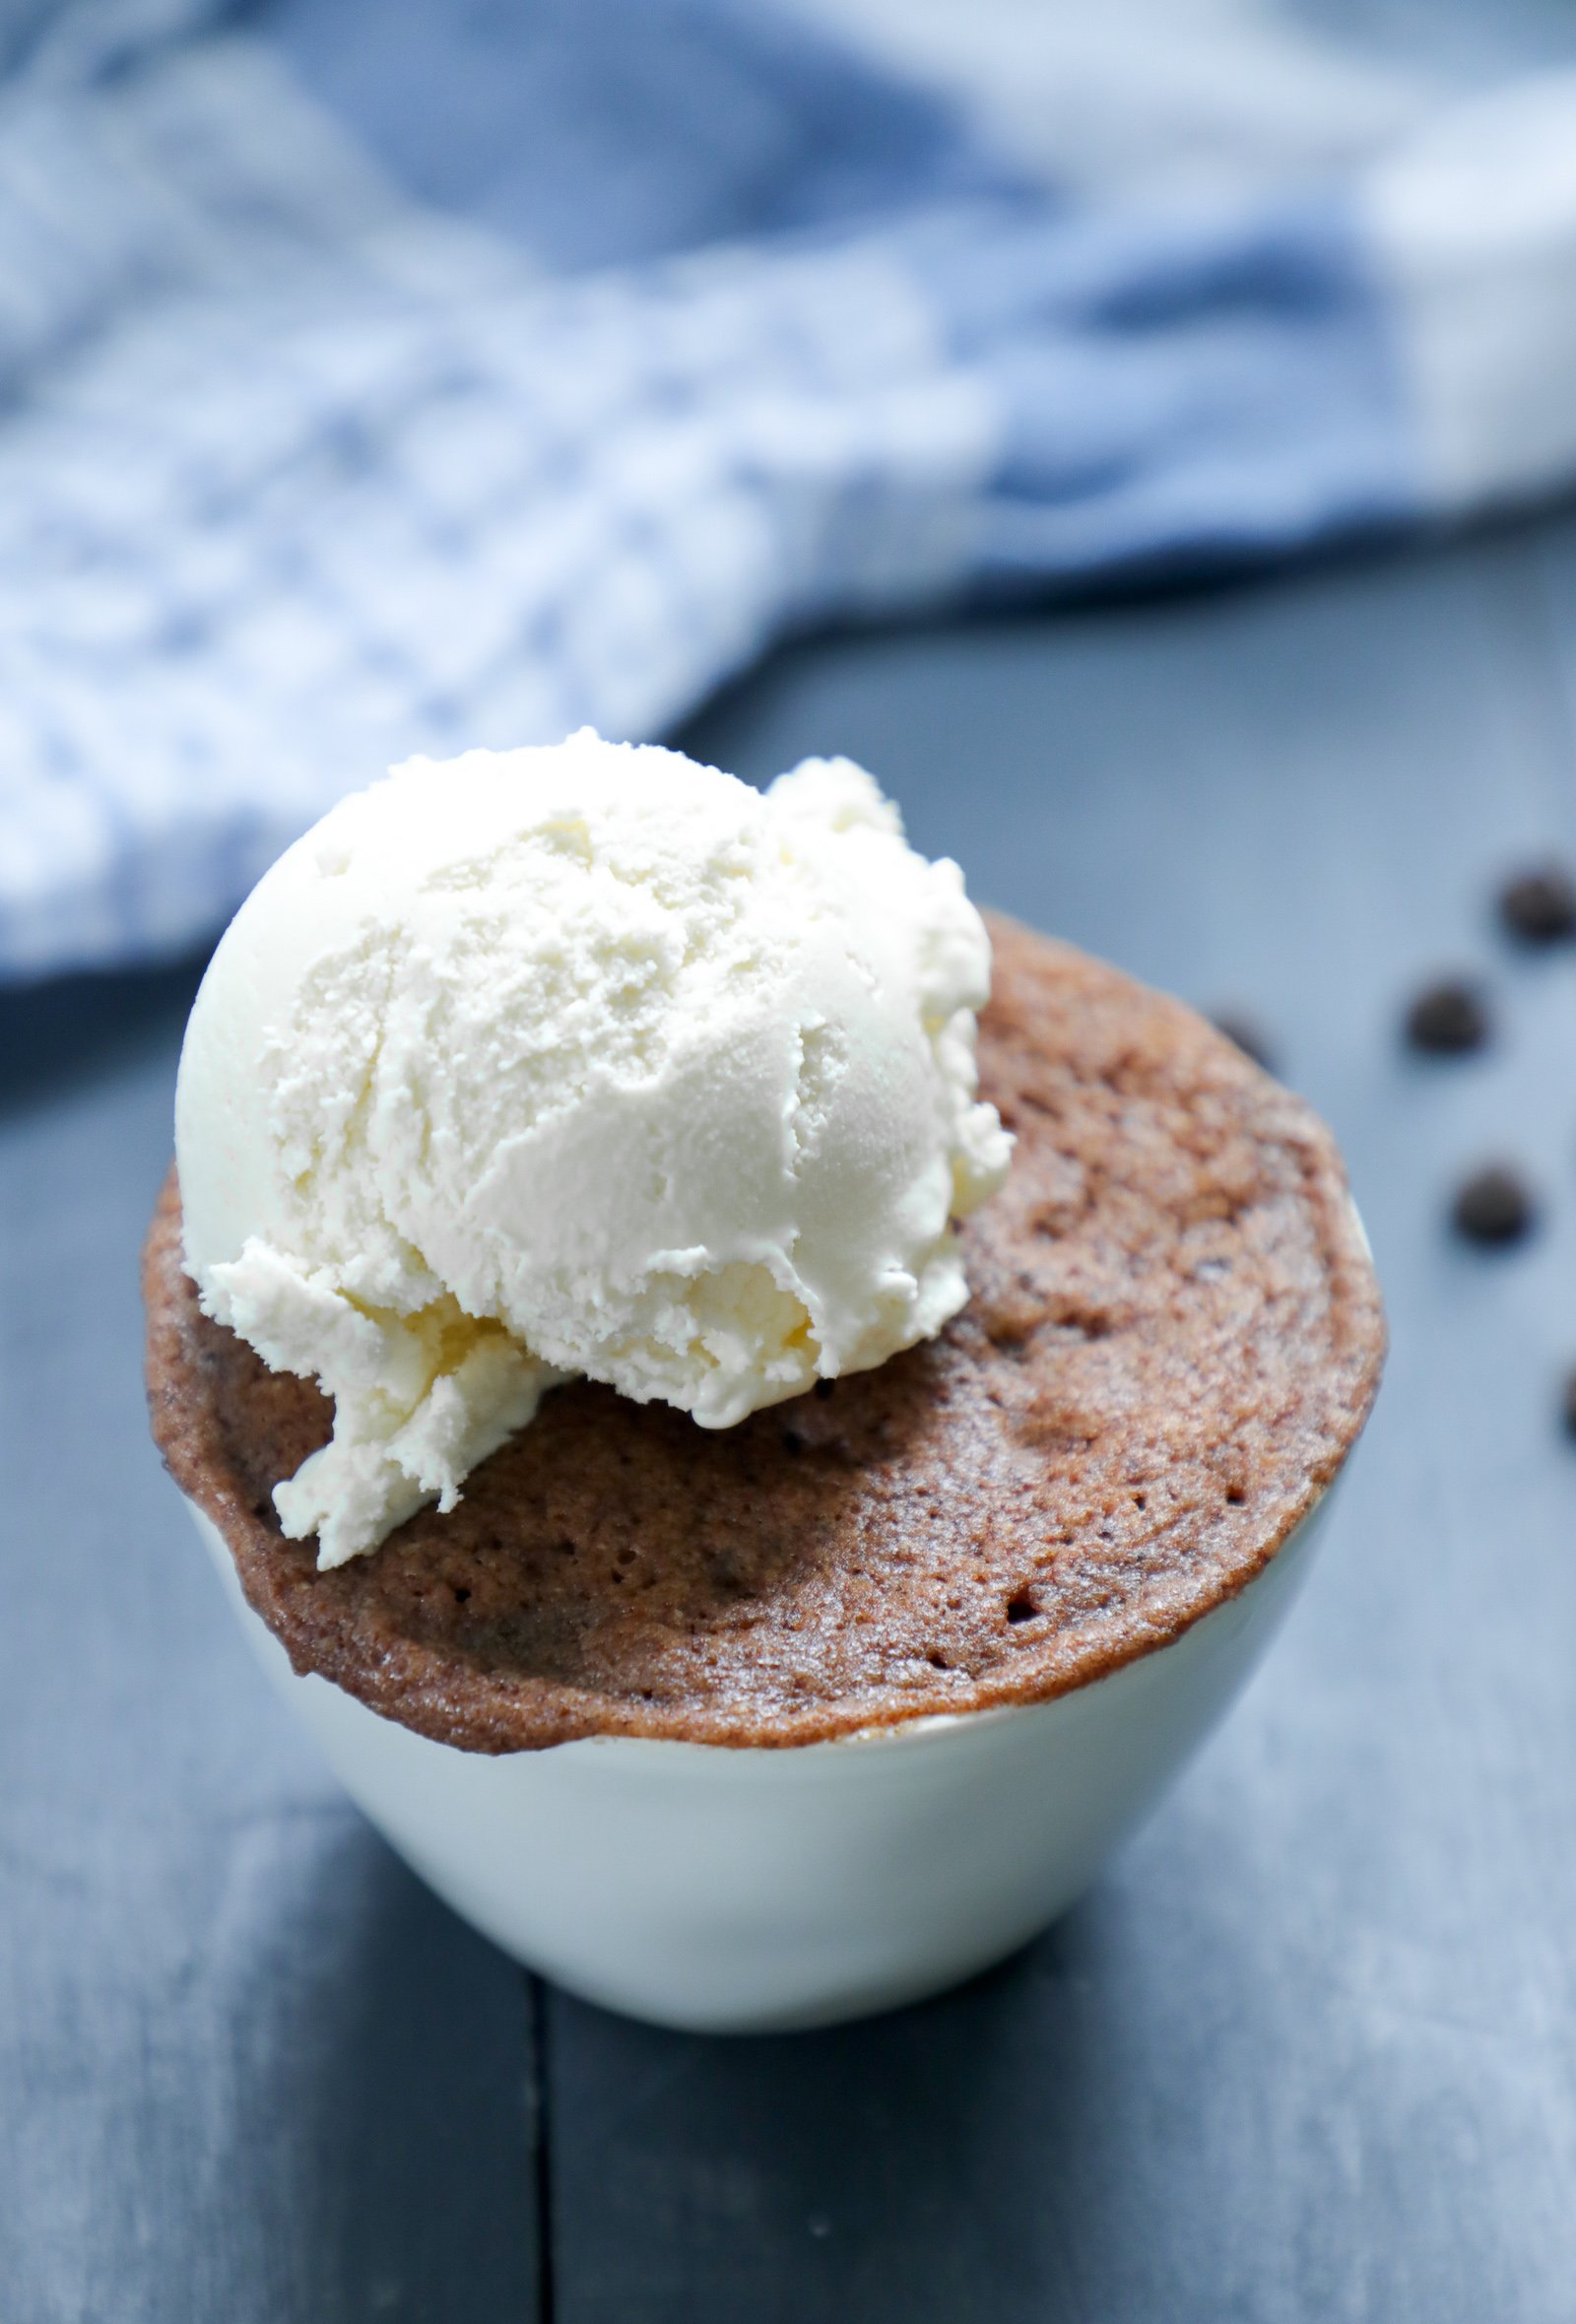 Keto Chocolate Mug Cake with a scoop of vanilla ice cream